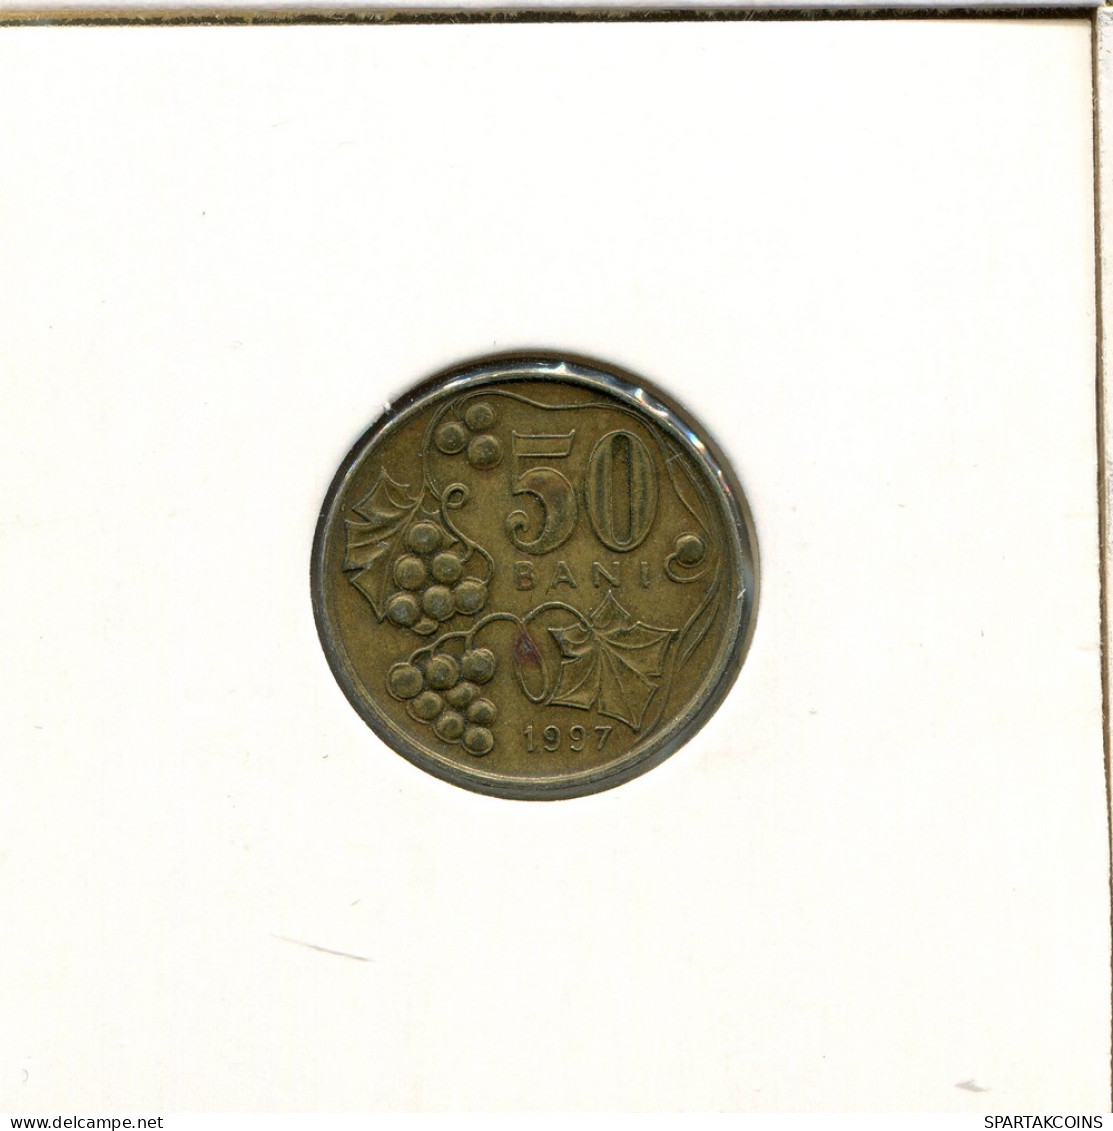 5 BANI 1997 MOLDOVA Coin #AR707.U - Moldova